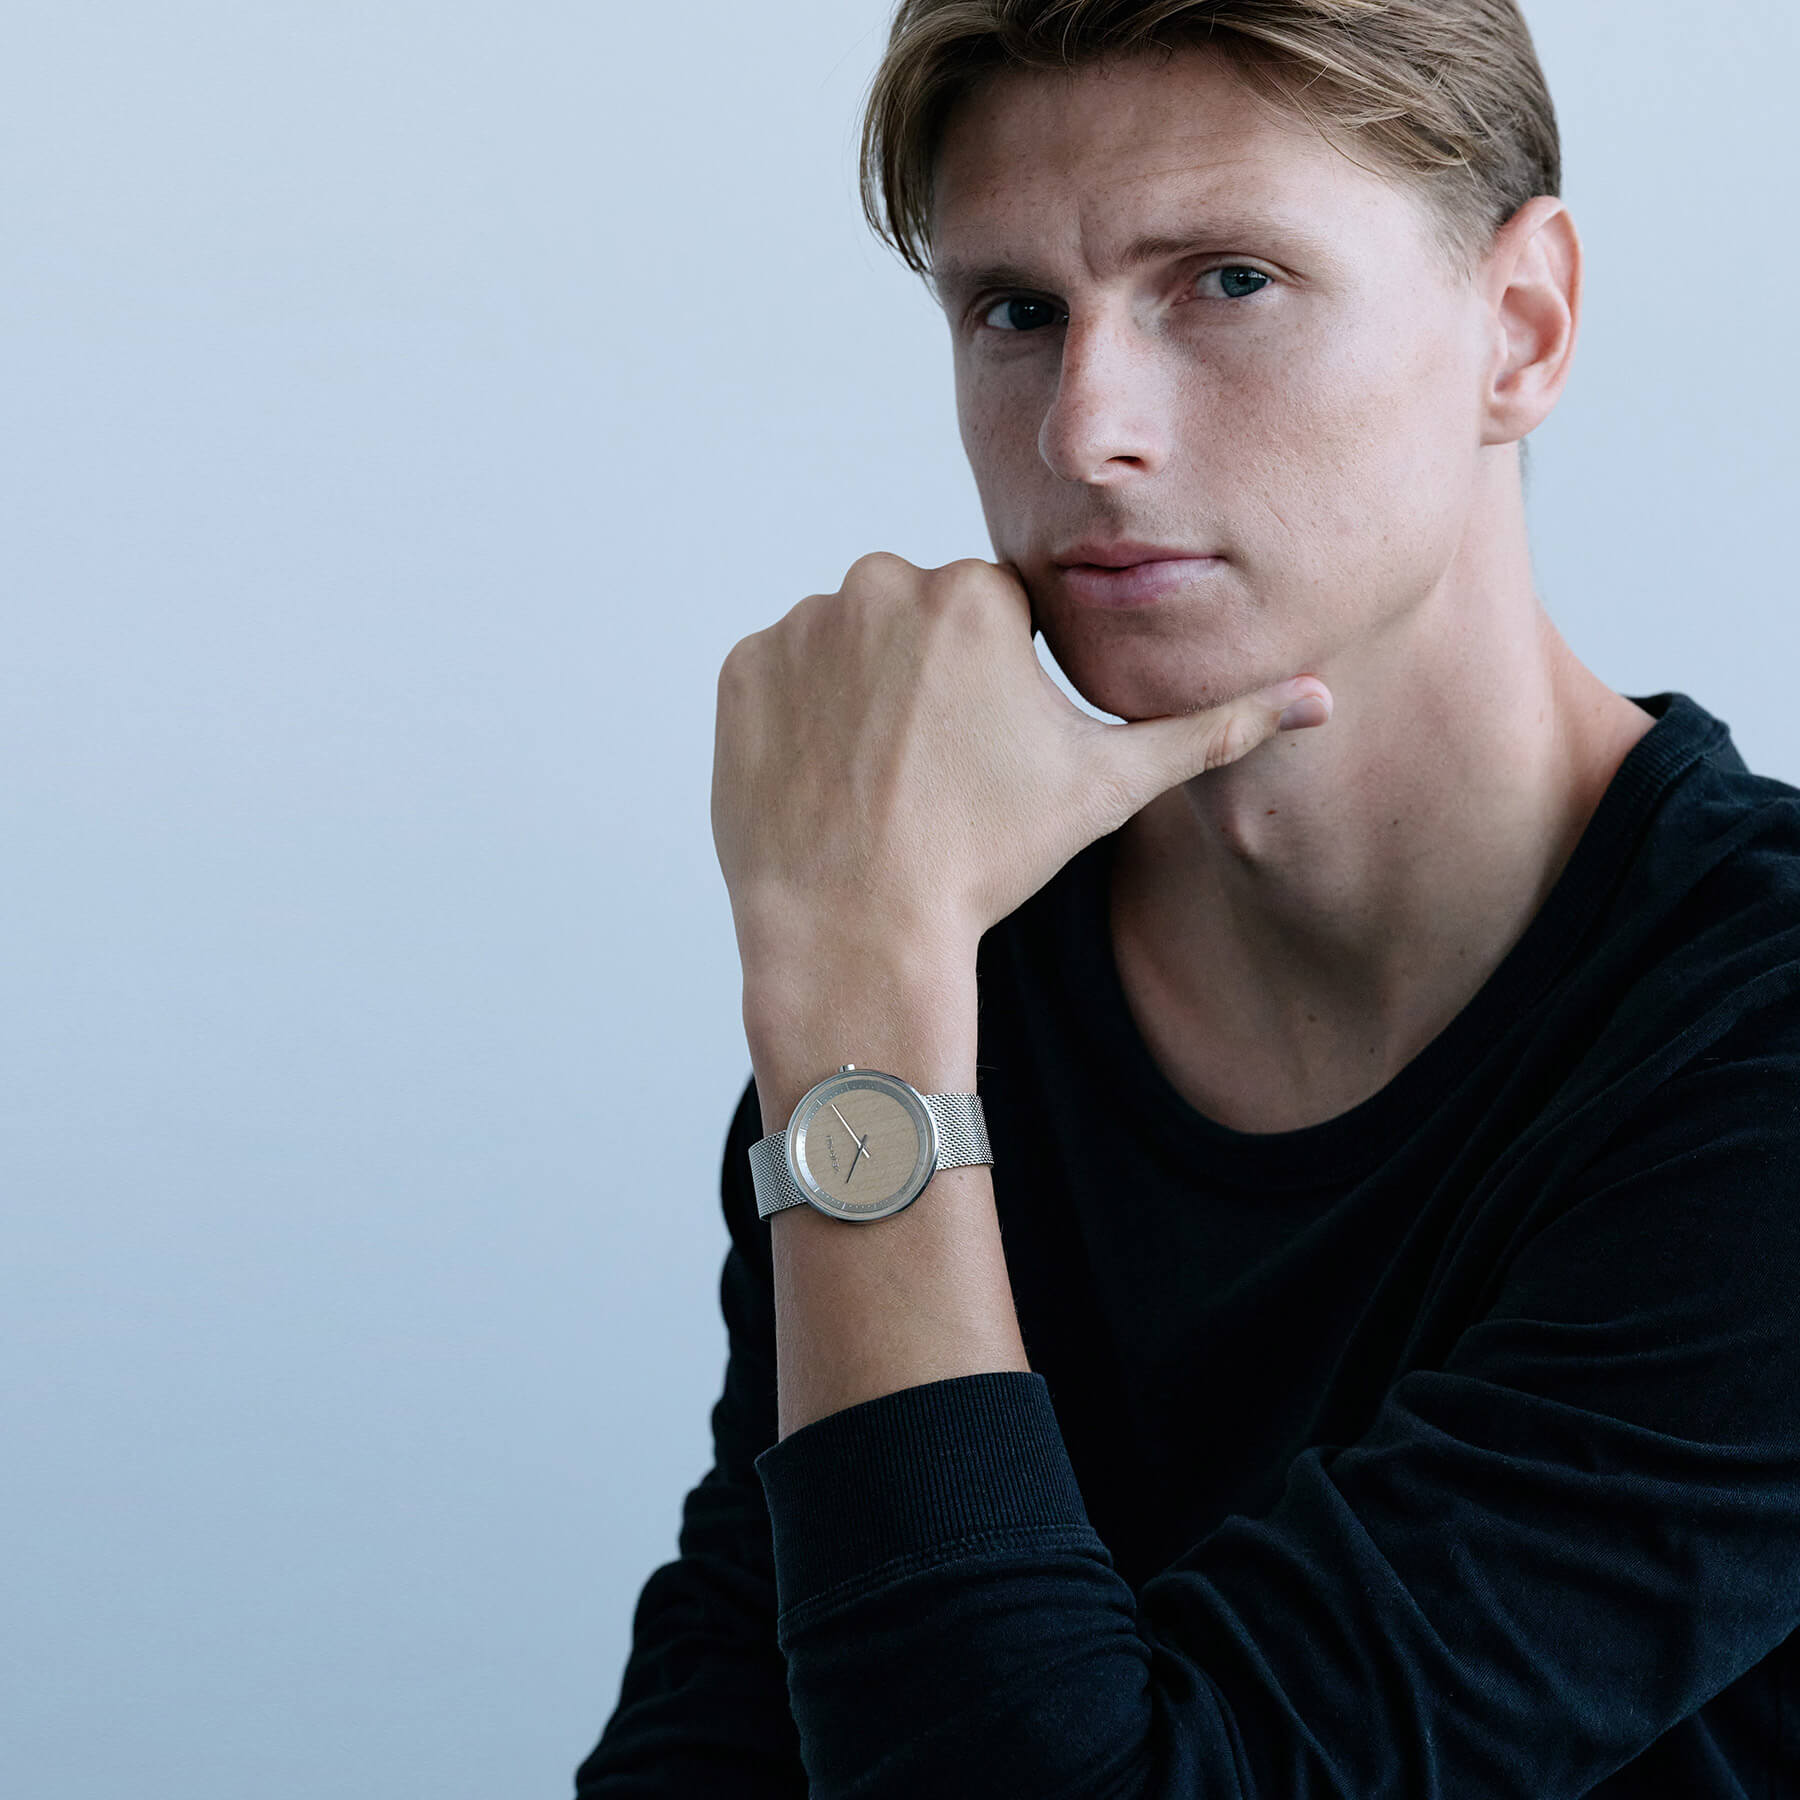 Kasper Junker wearing a simple wooden watch with steel casing and steel mesh band